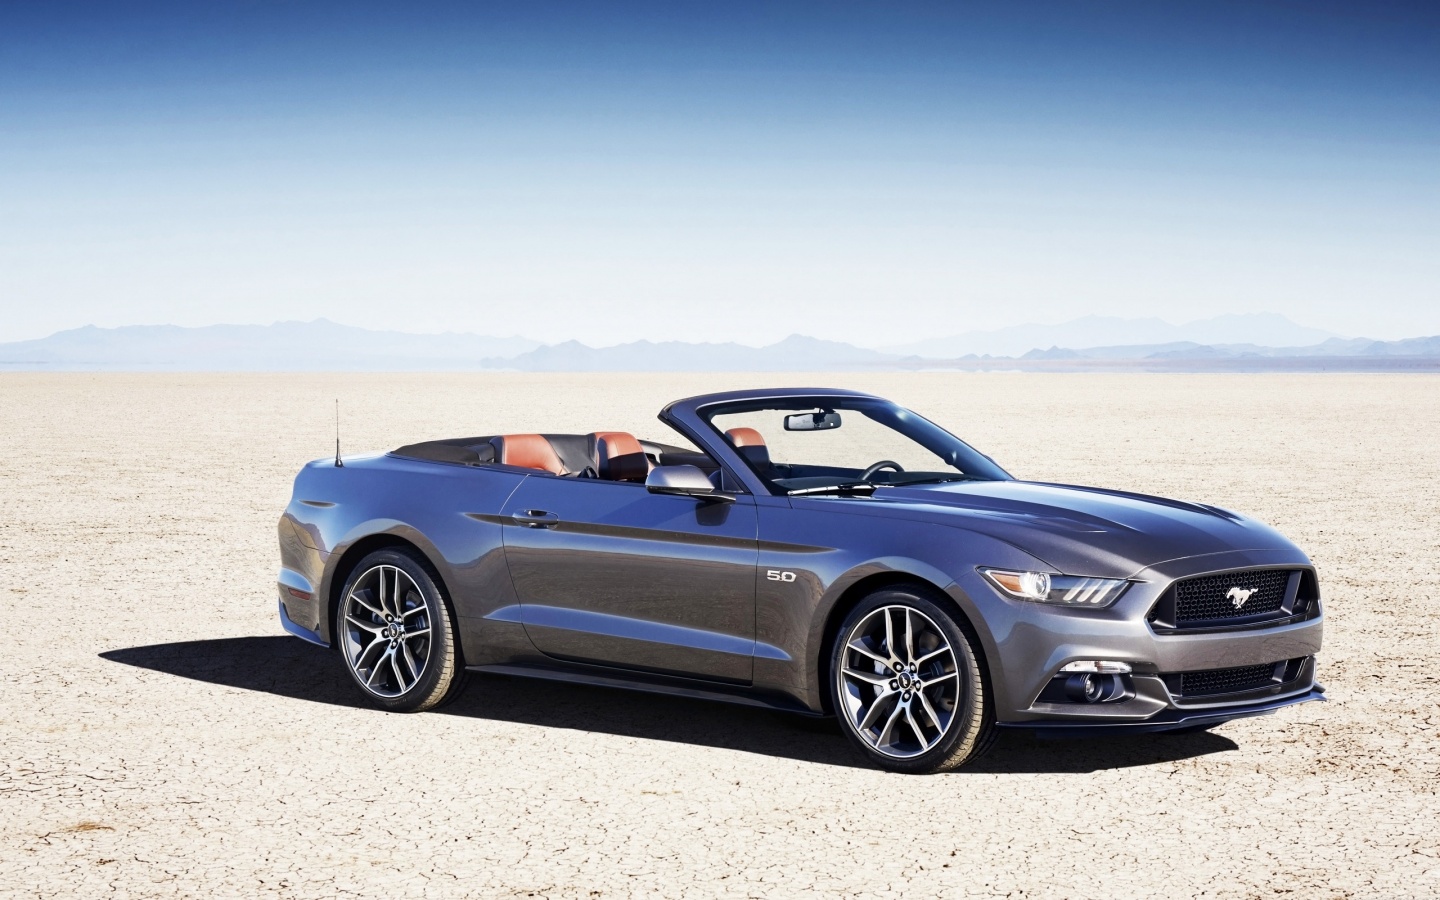 2015 Ford Mustang Convertible Wallpaper HD Car Wallpapers